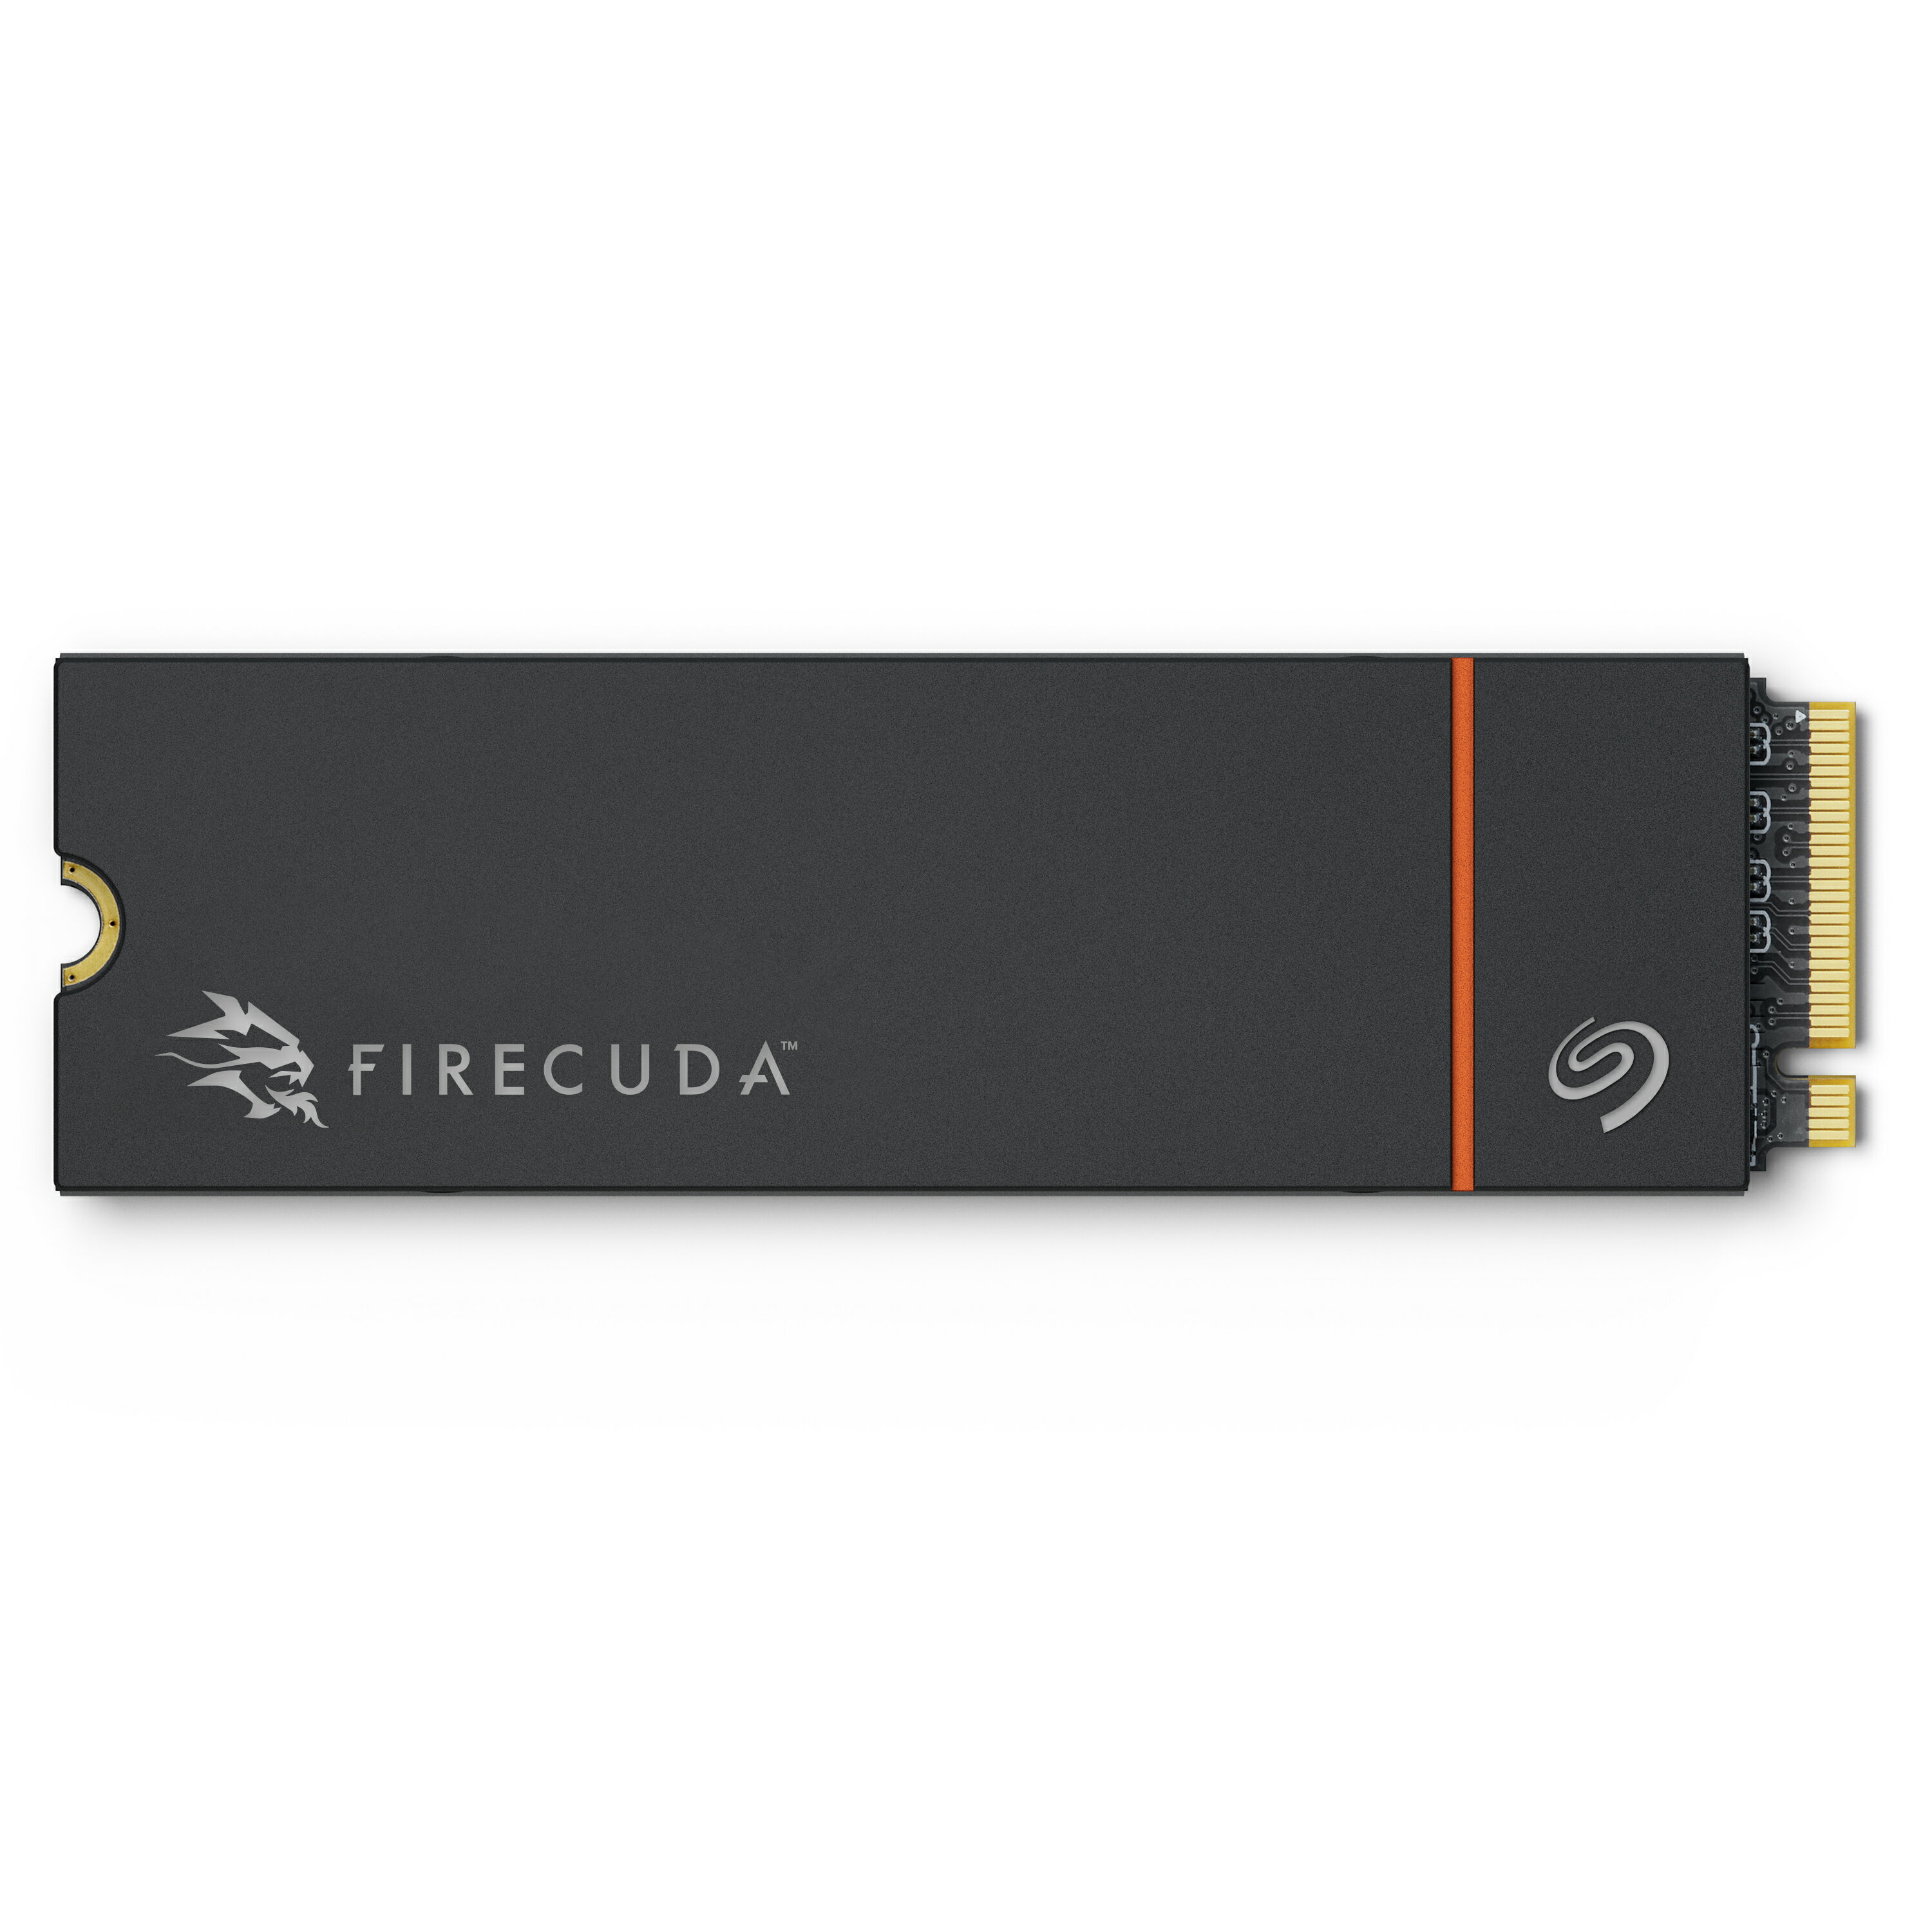 Seagate シーゲイト FireCuda 530 M.2 内蔵 SSD ヒートシンク付き  1TB PCIe Gen4 x4 読取速度 7300MB/s 5年保証 データ復旧 3年付 正規代理店 ZP1000GM3A023